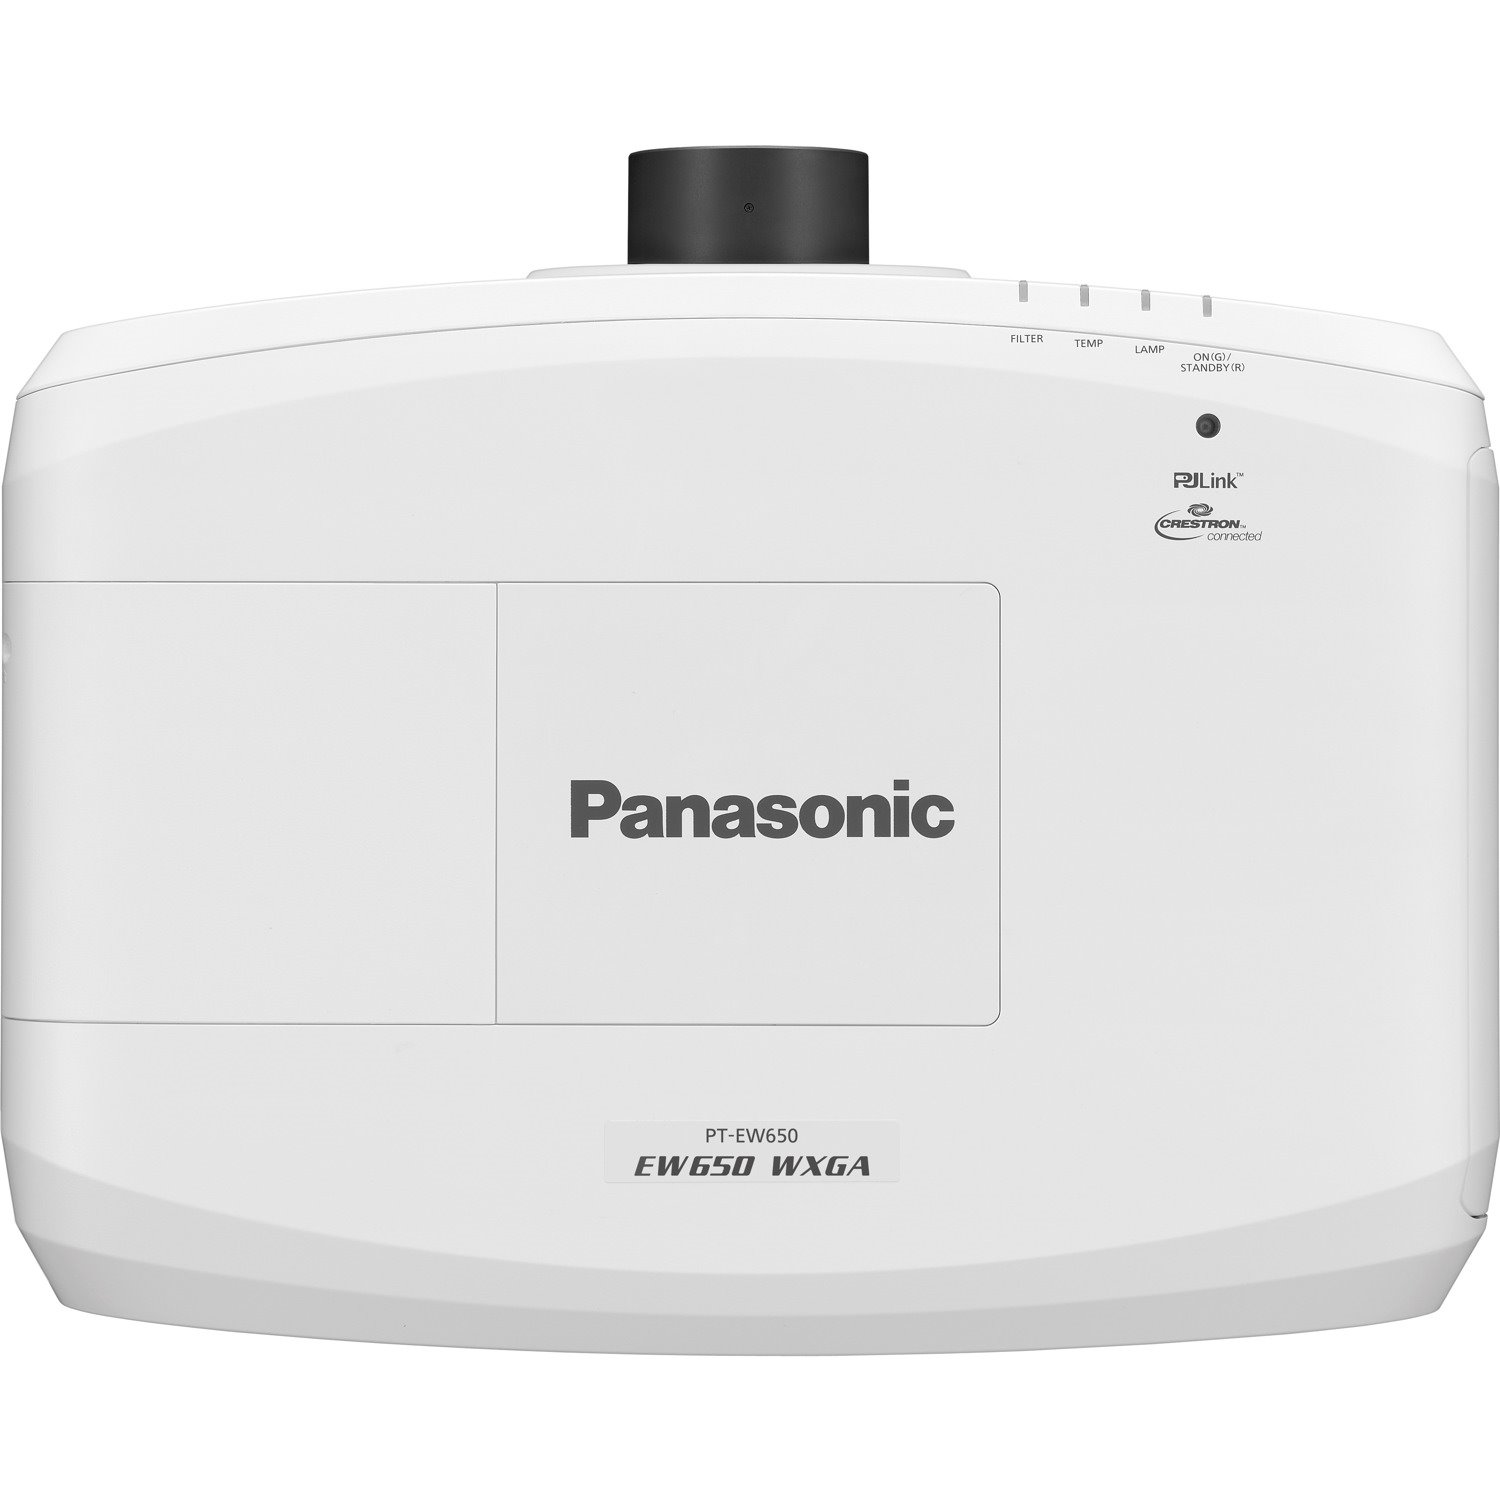 Panasonic PT-EW650 LCD Projector - 16:10